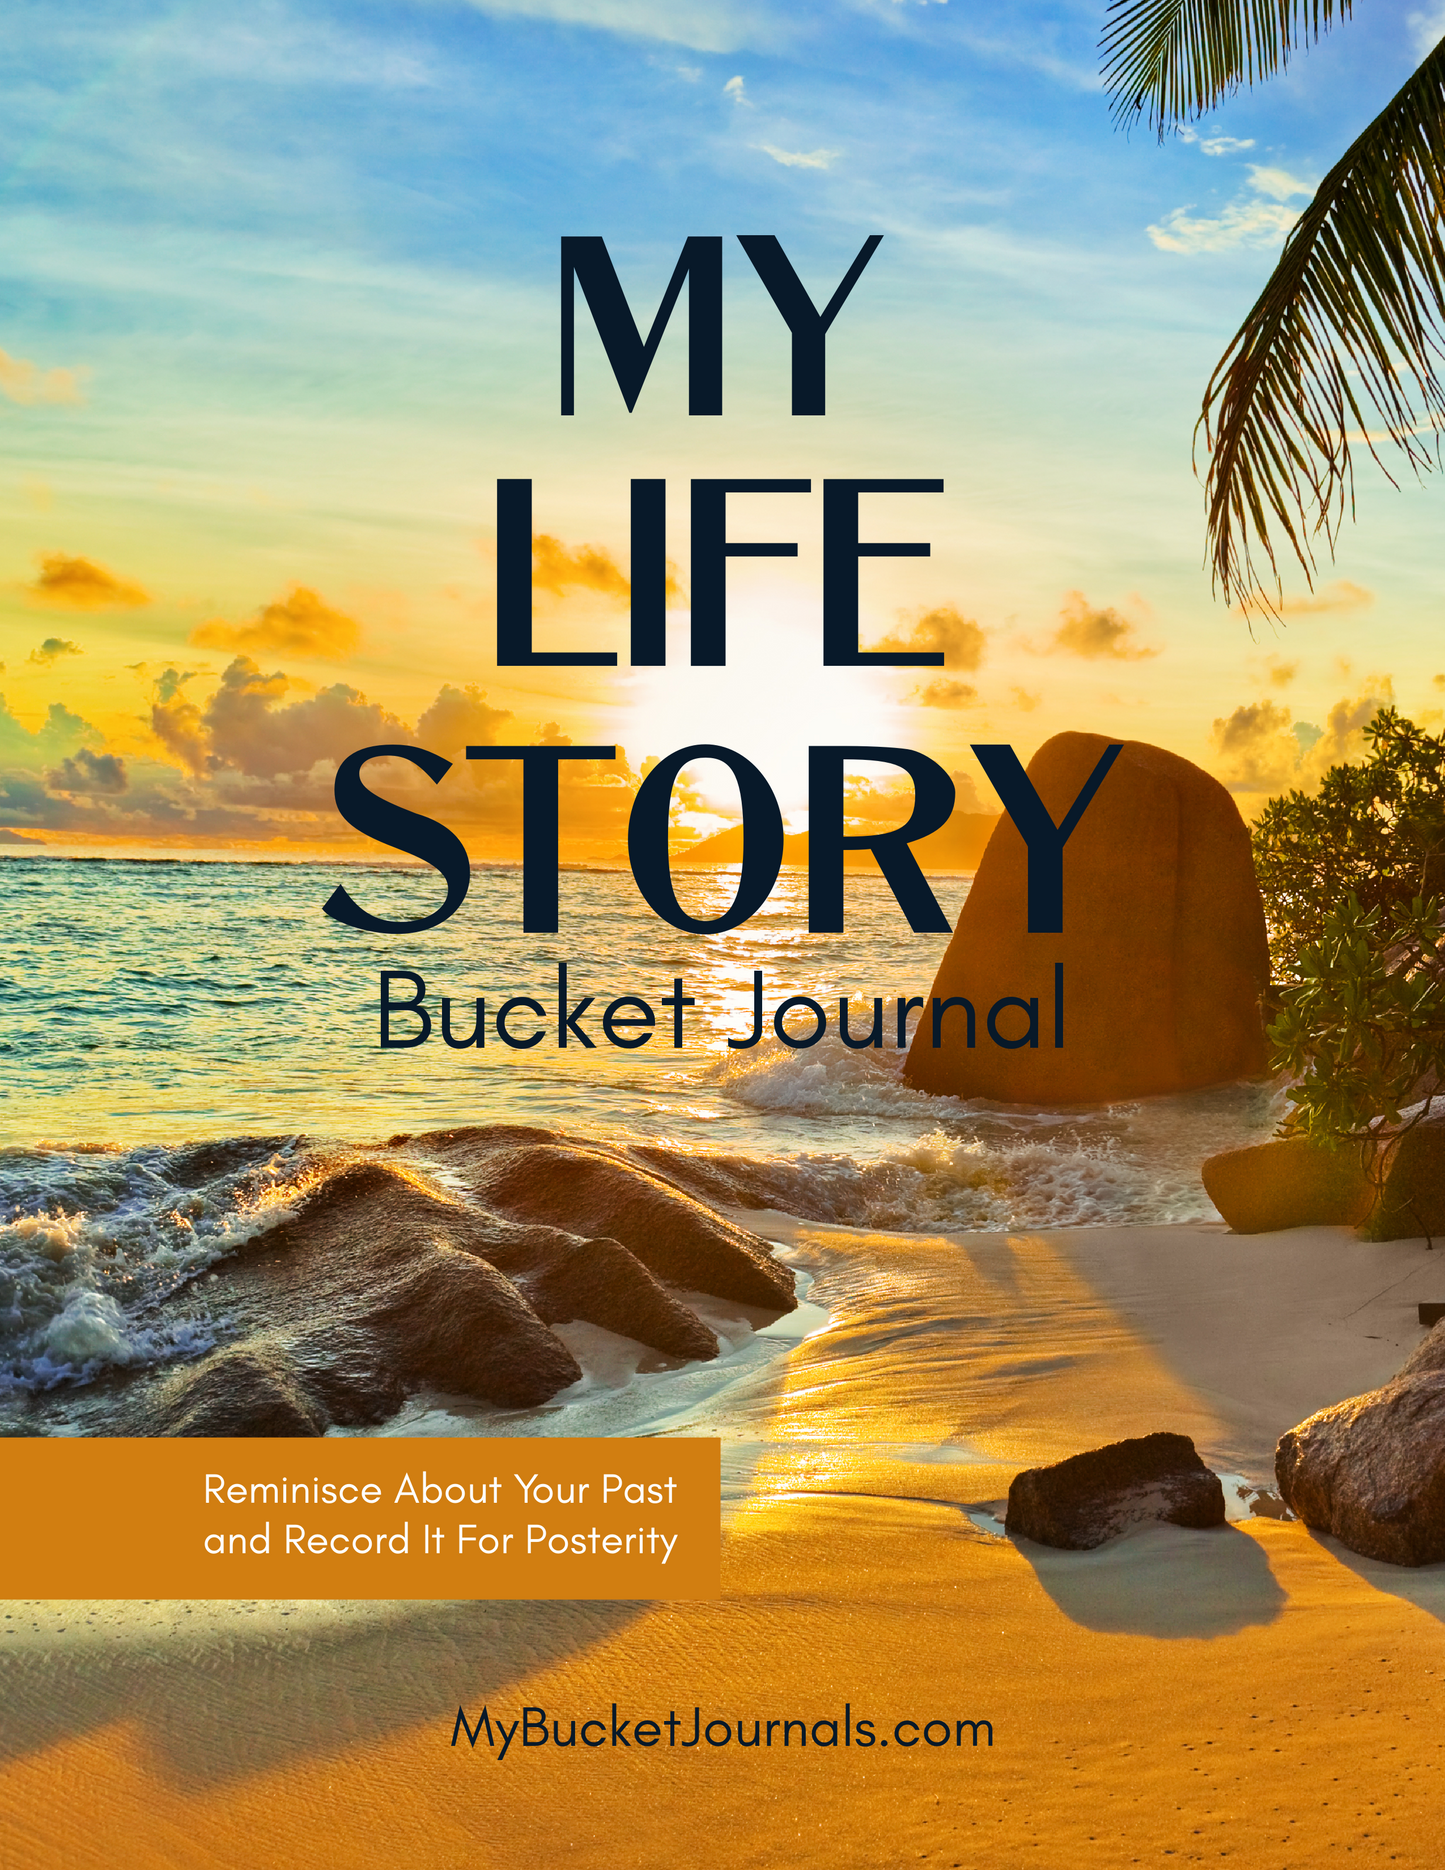 SD-MY Life Story Bucket Journal